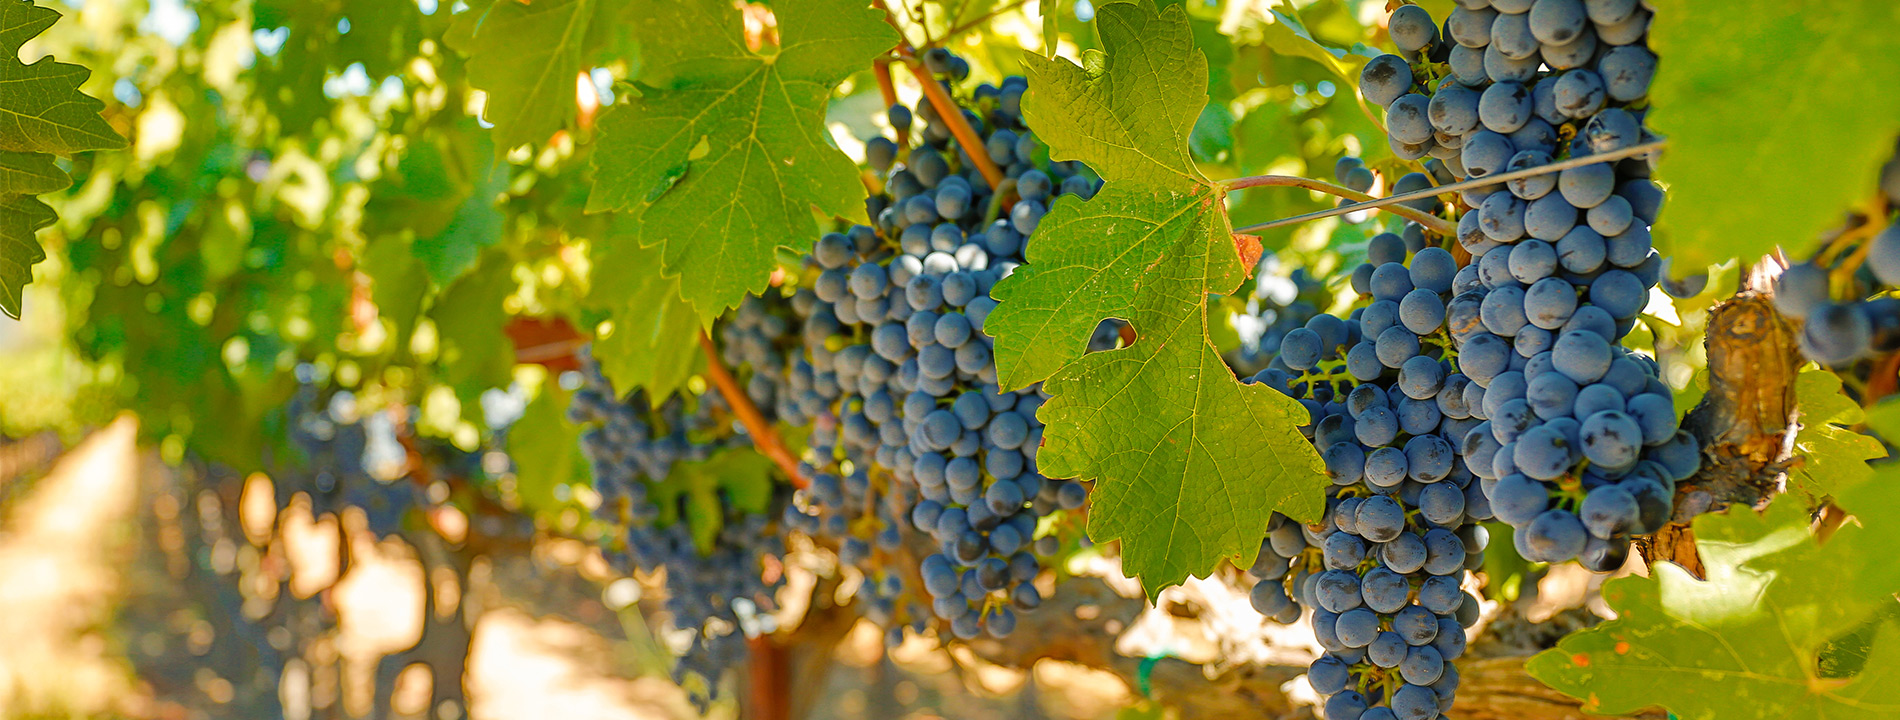 Grapes in a vinyard.